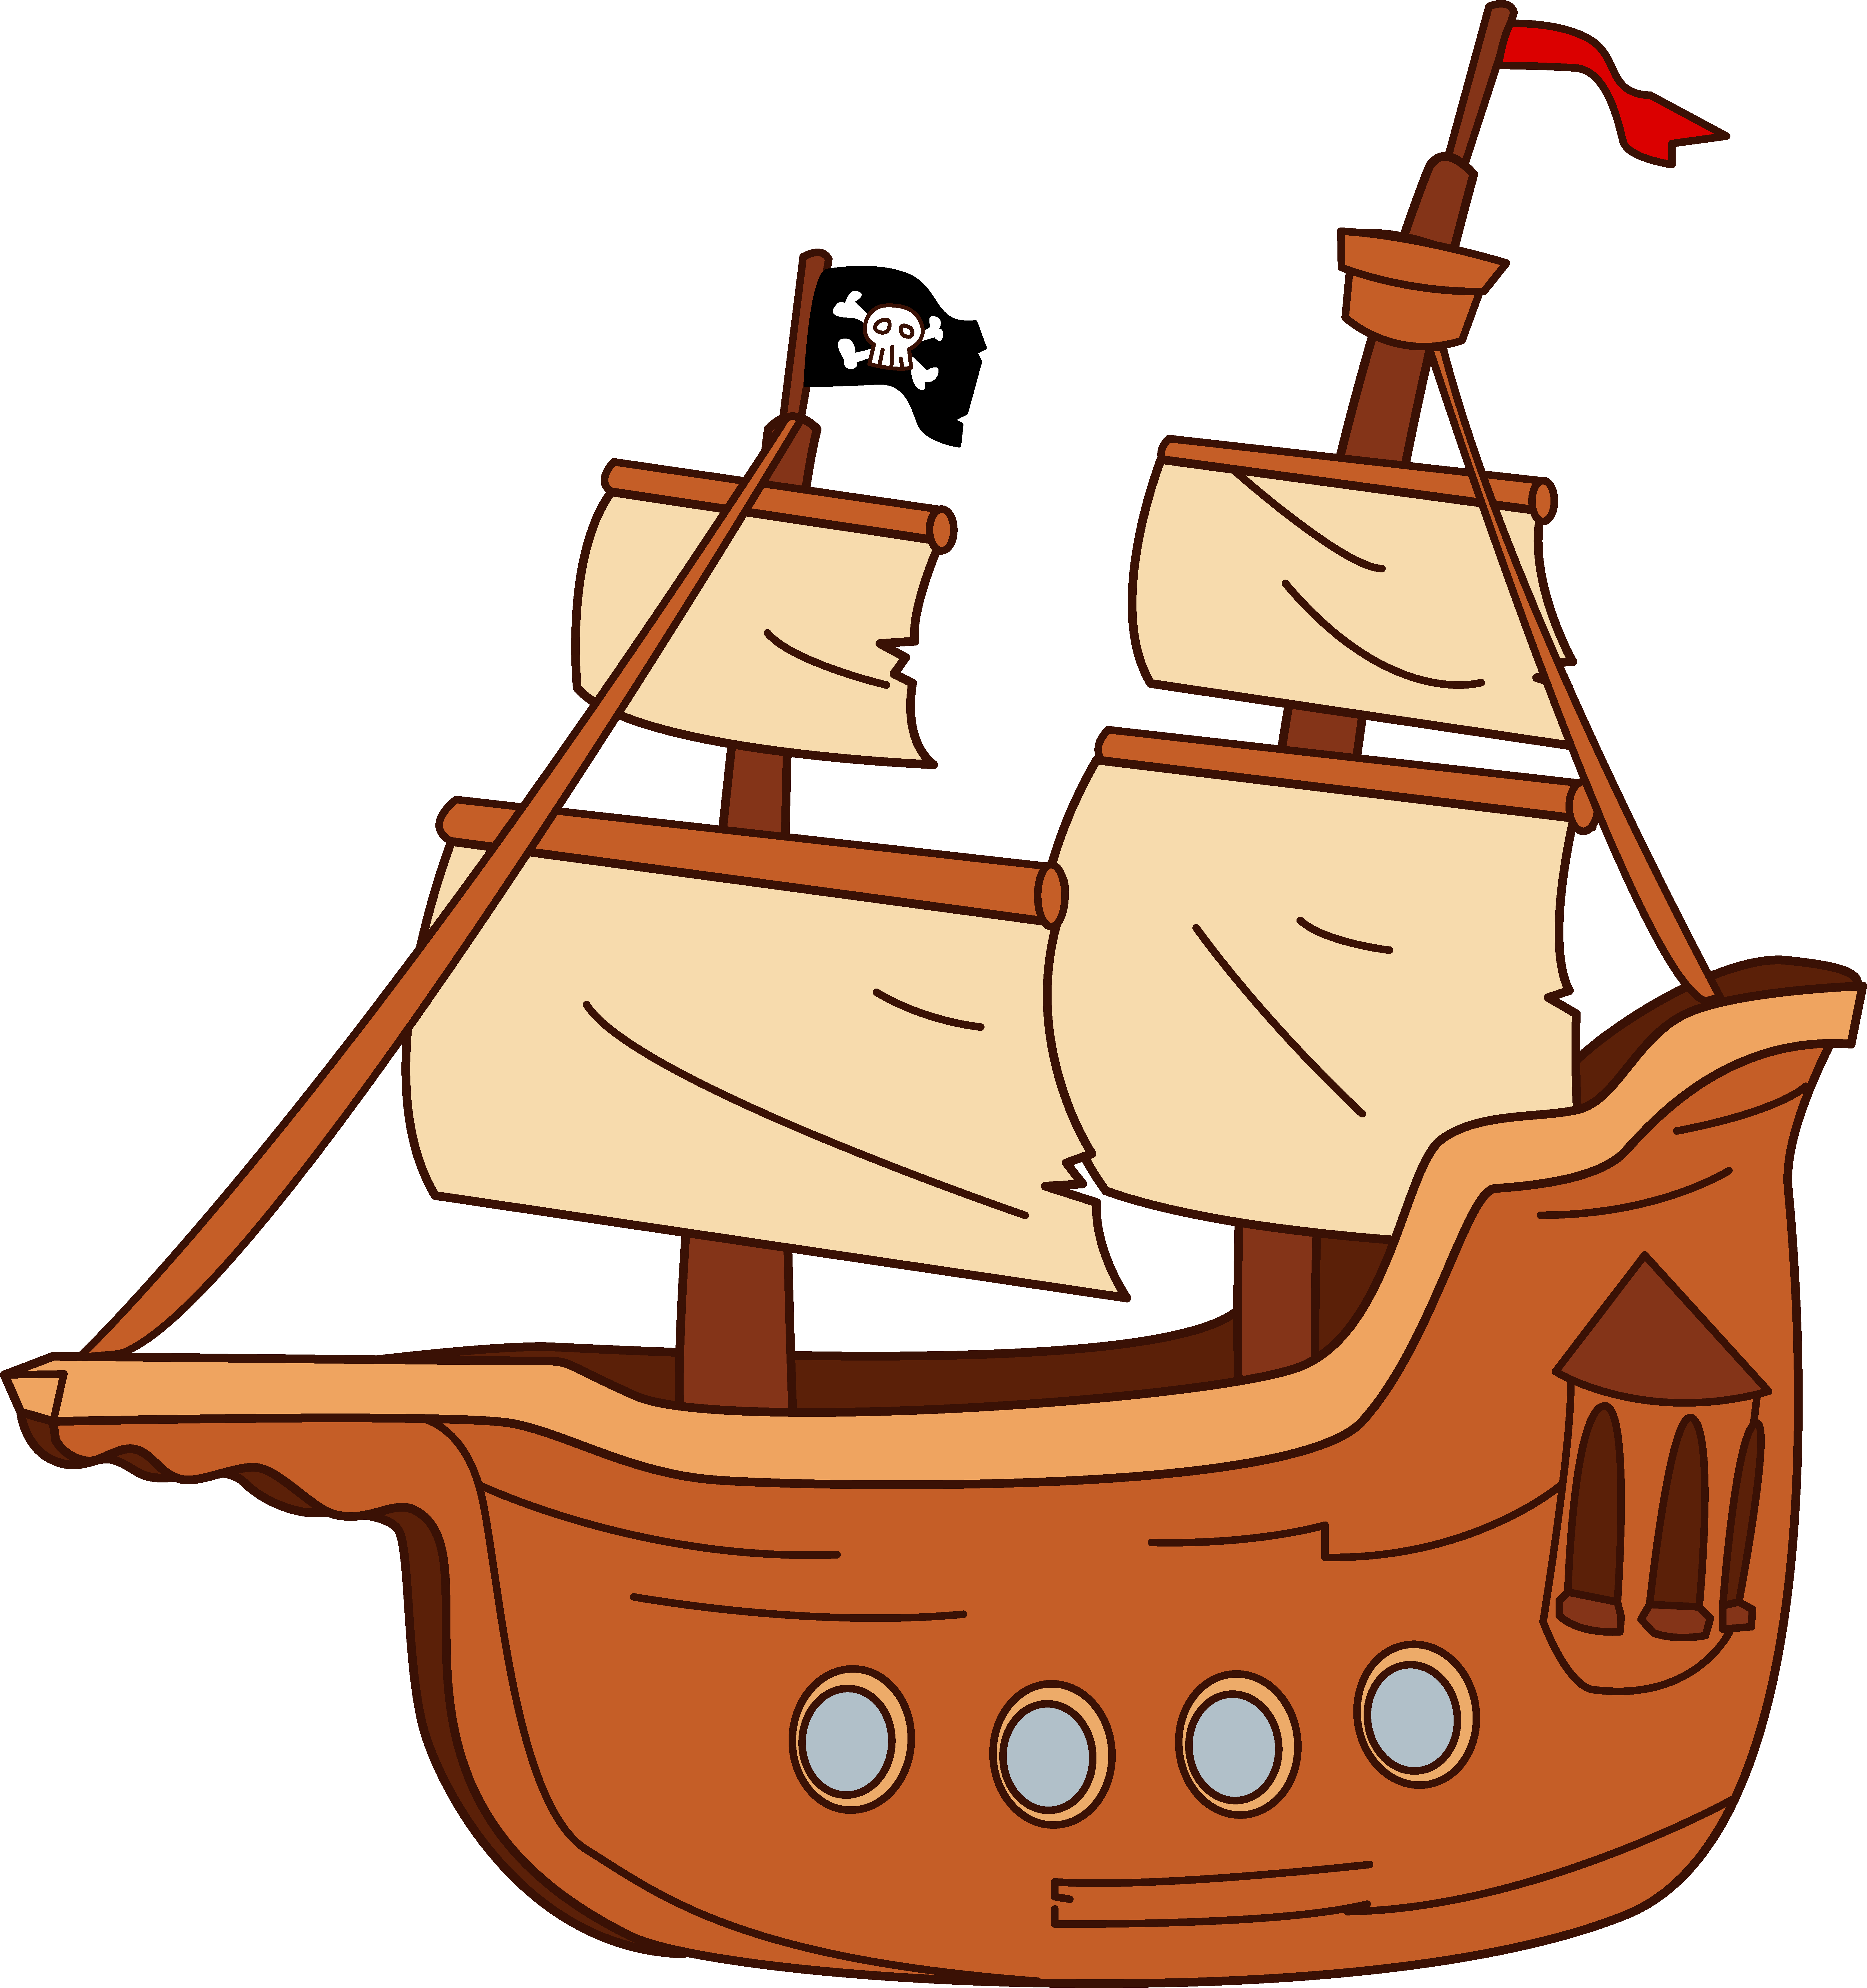 boat clipart - Recherche Google | транспорт | Pinterest | Pirate ...